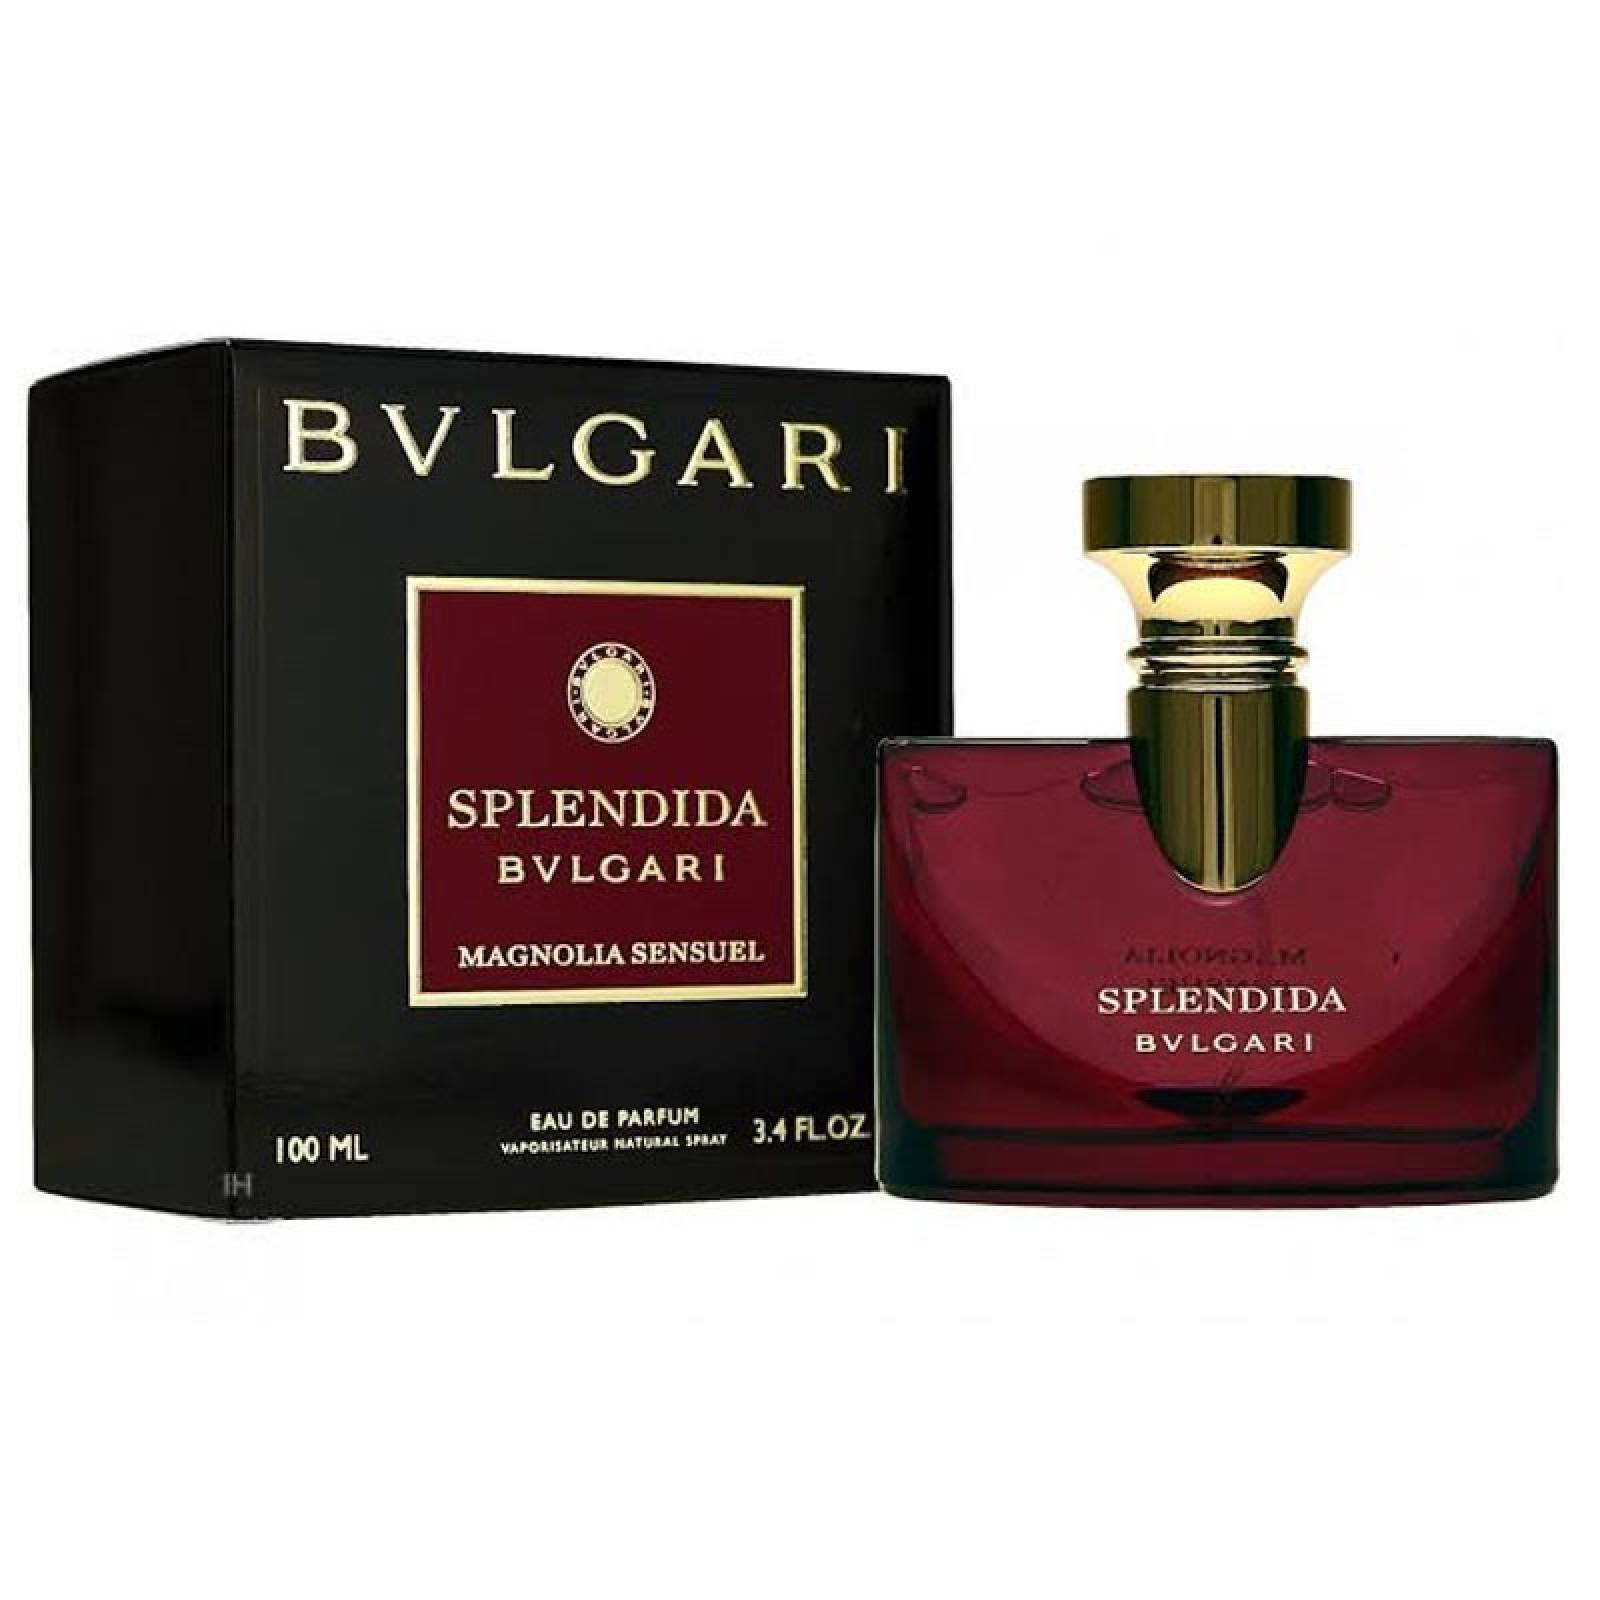 Splendida Magnolia Sensuel 100 ml Eau de Parfum de Bvlgari